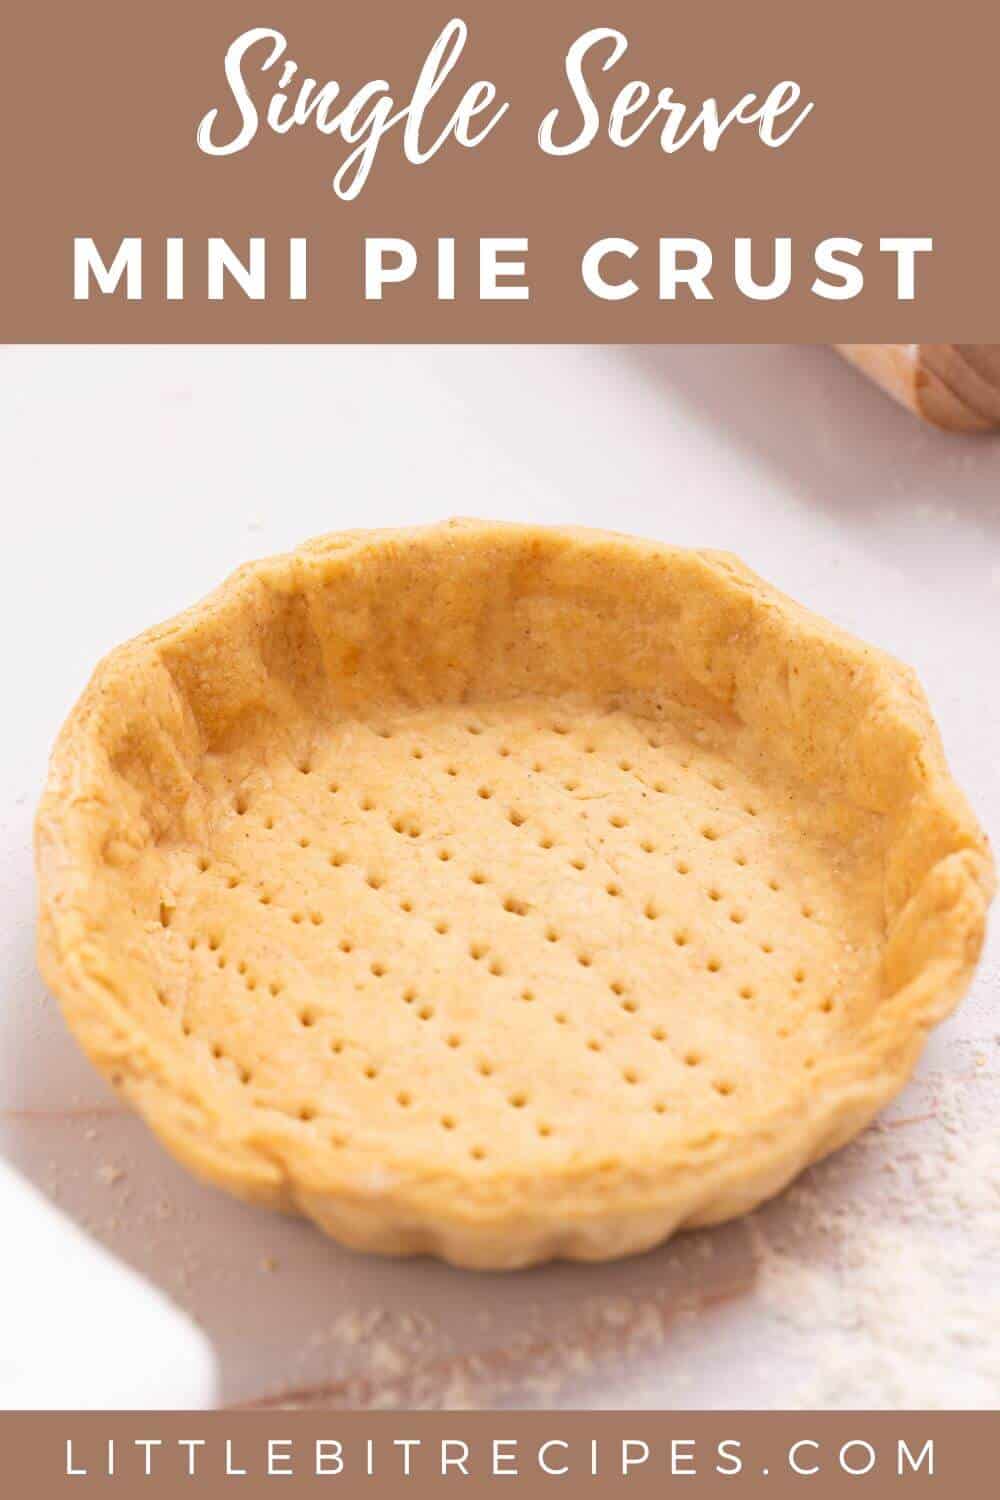 mini pie crust with text.